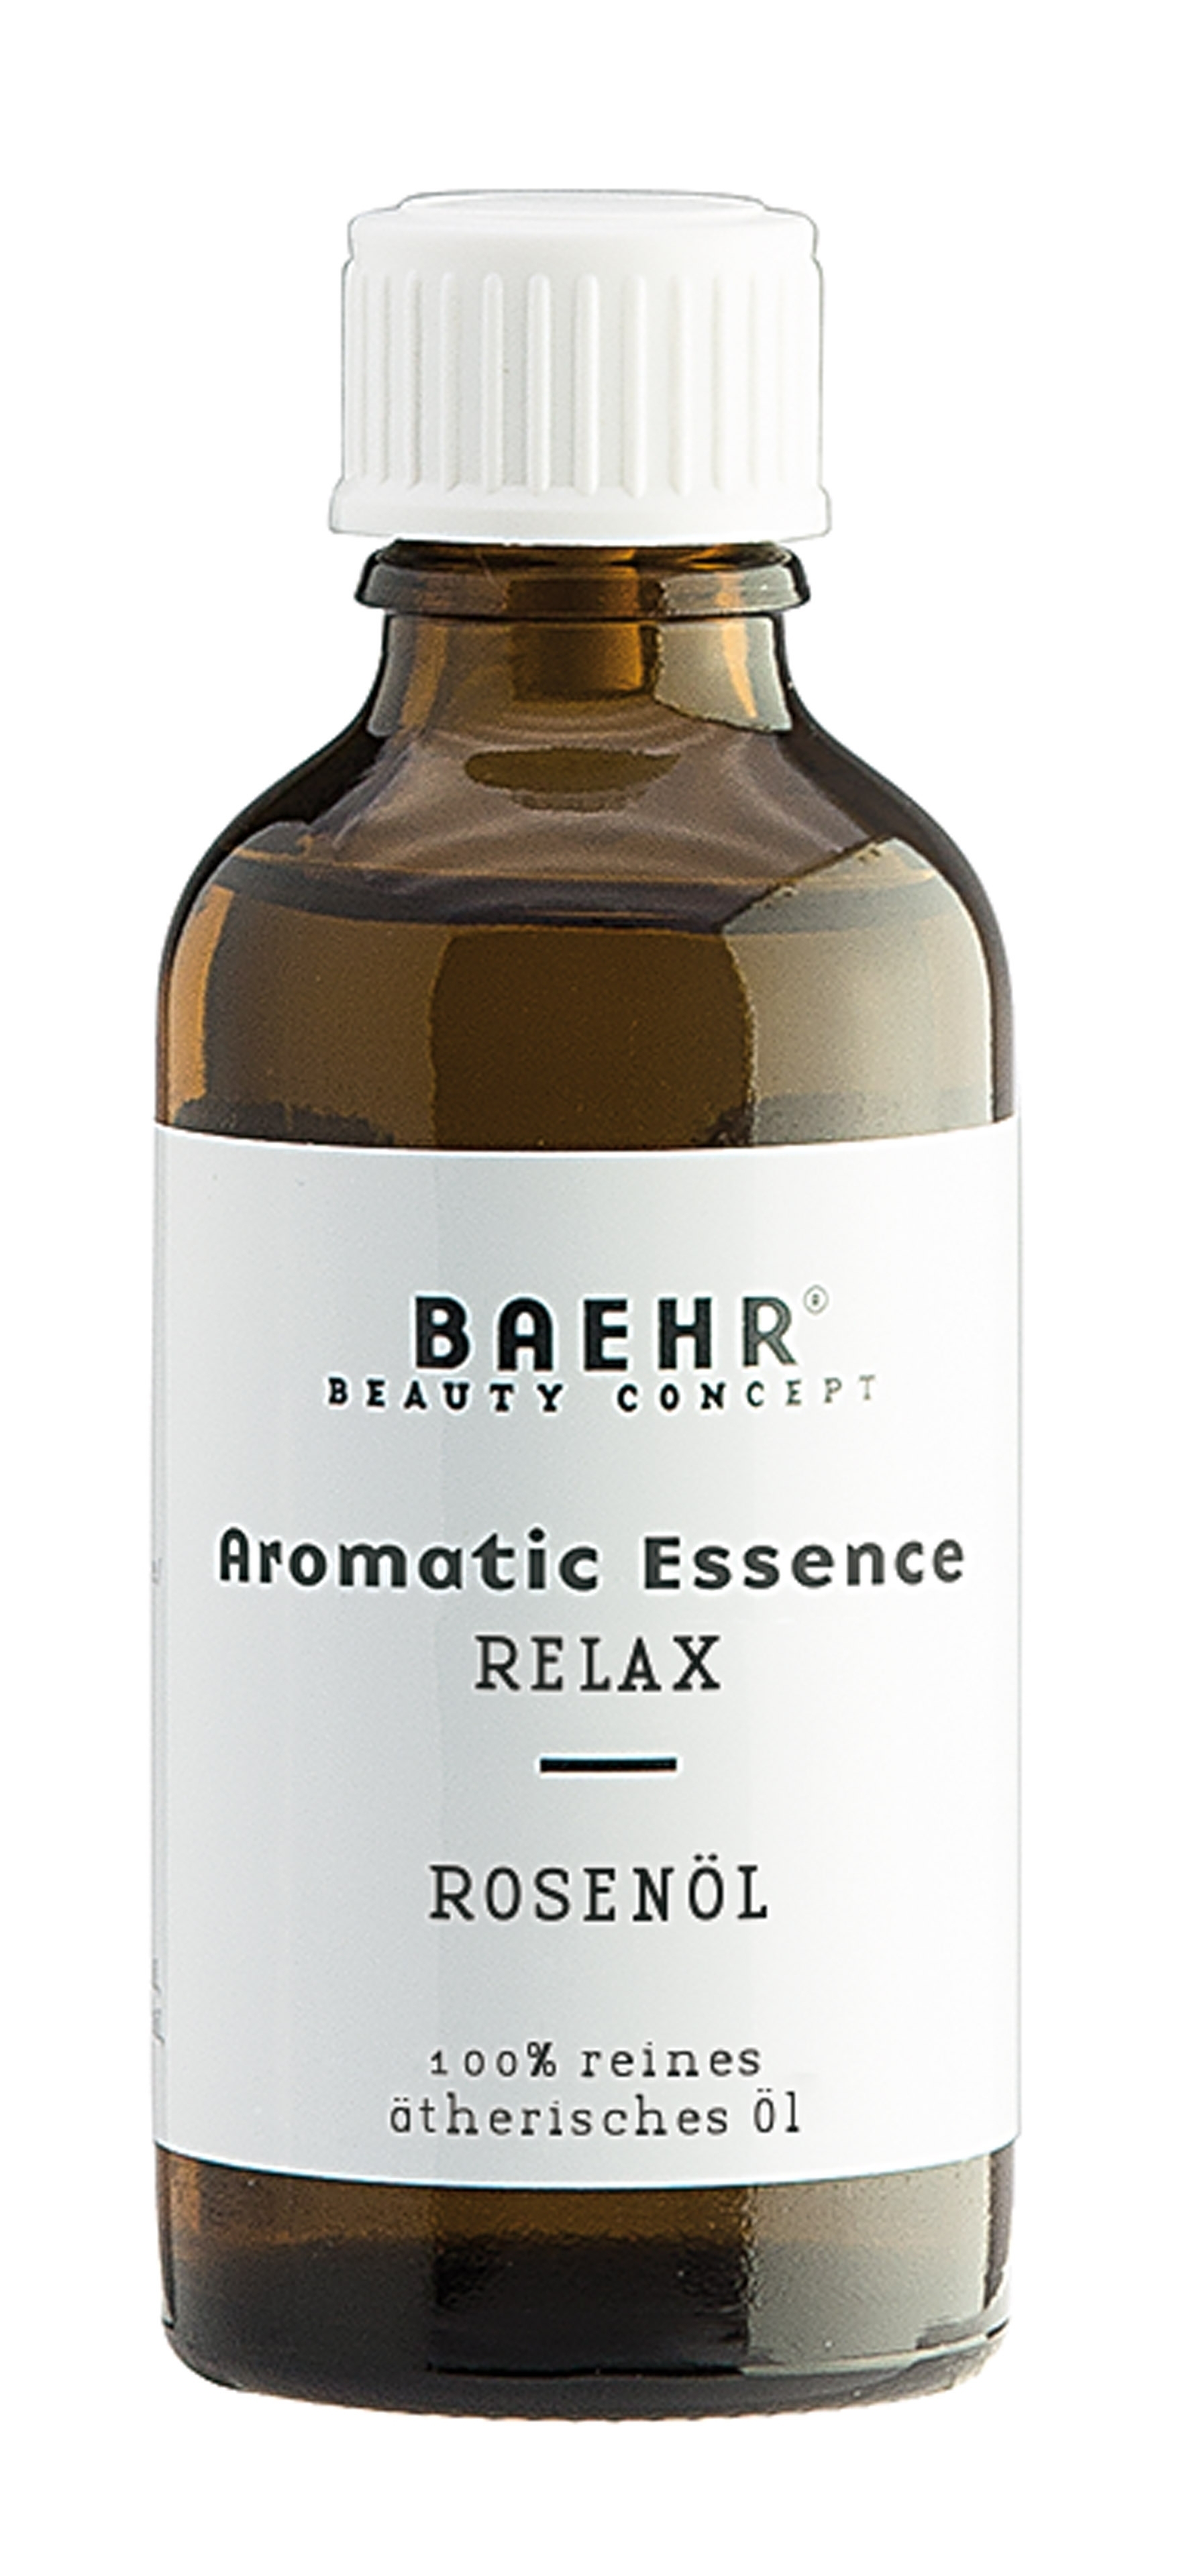 BAEHR BEAUTY CONCEPT - Aromatic Essence RELAX Rosenöl 50 ml